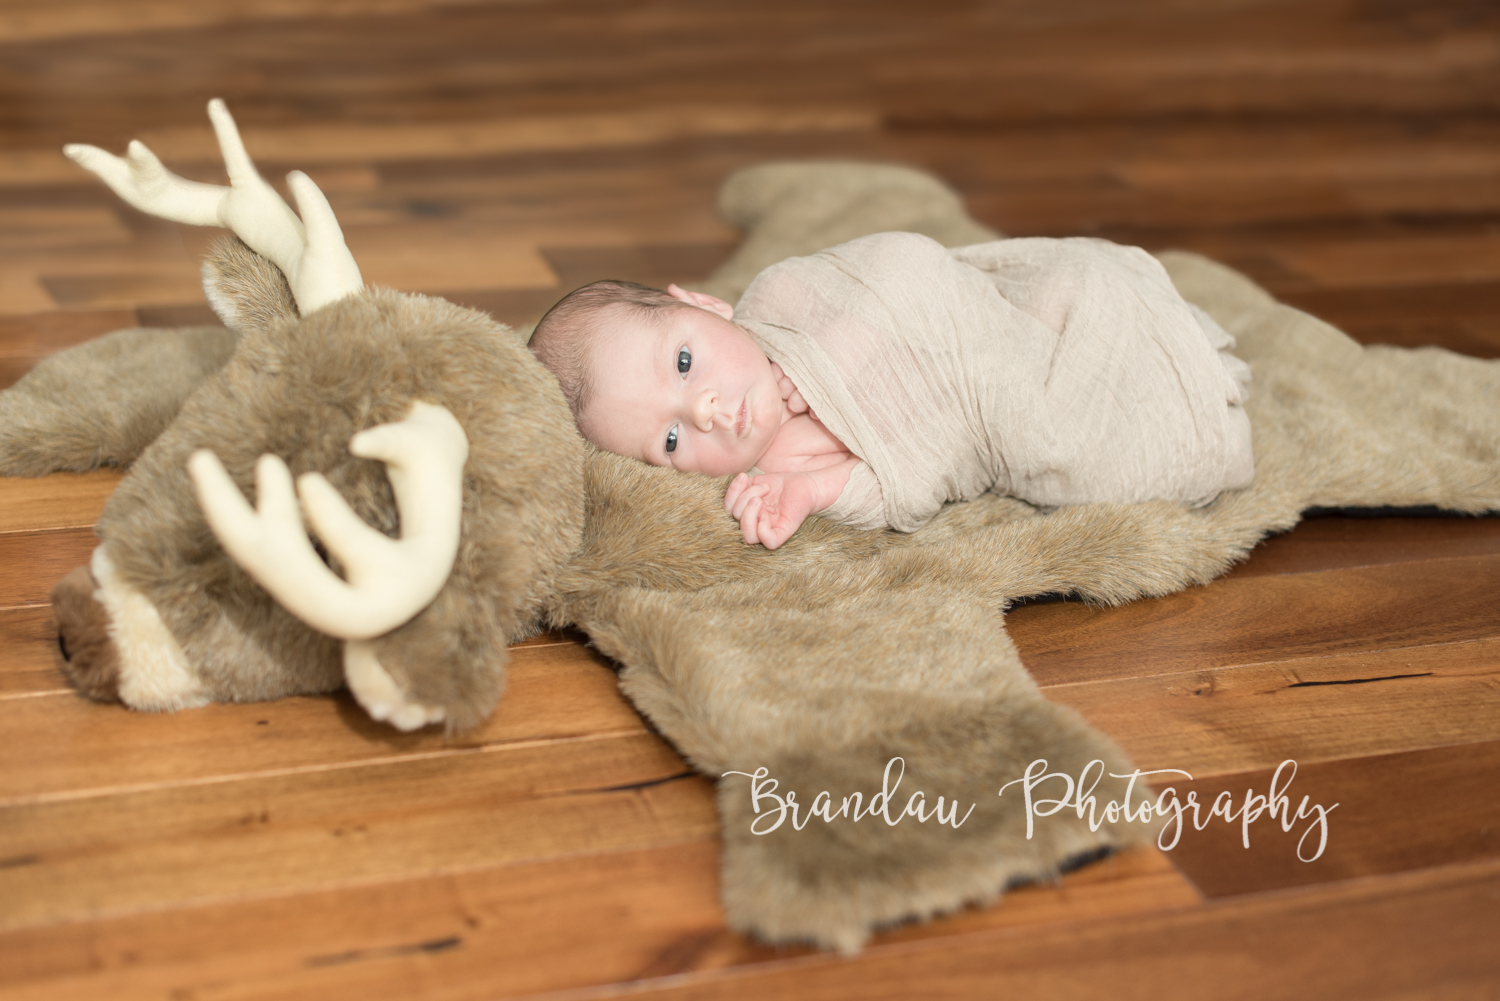 Brandau Photography - Central Iowa Newborn 050816-9.jpg